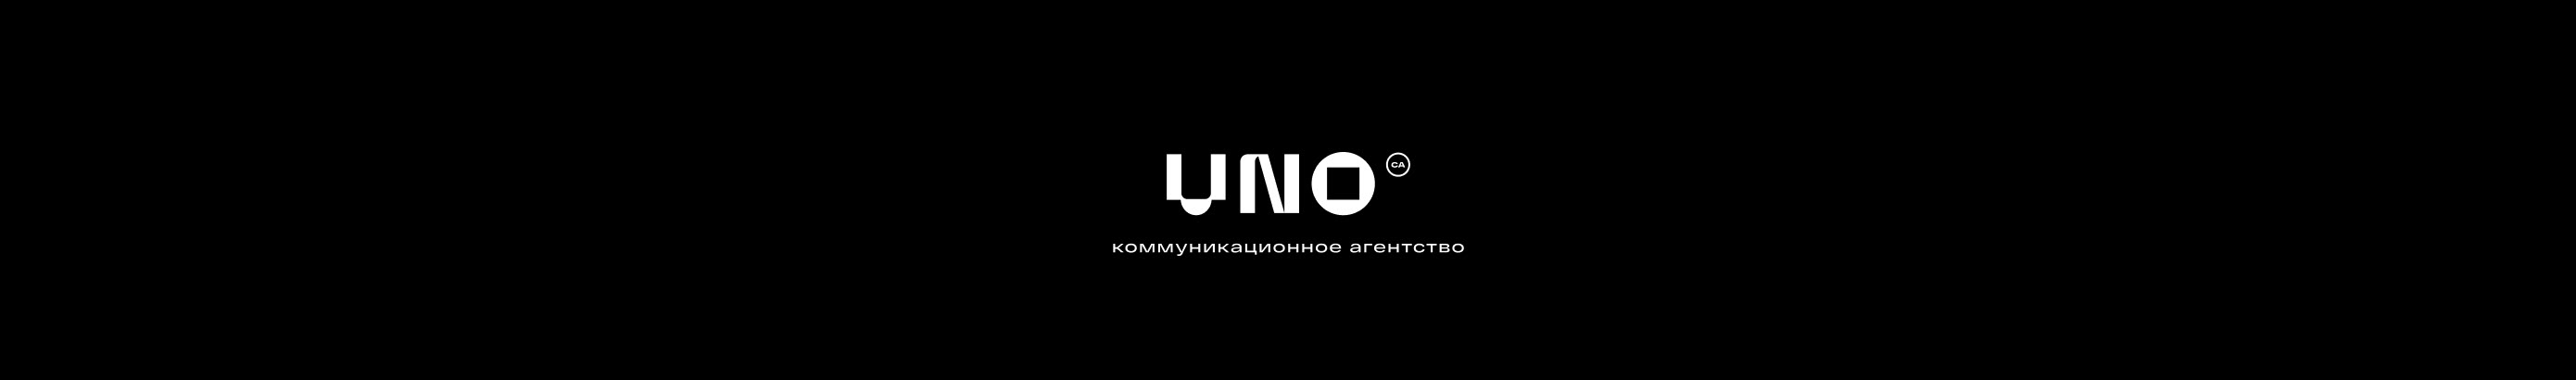 Uno agency's profile banner